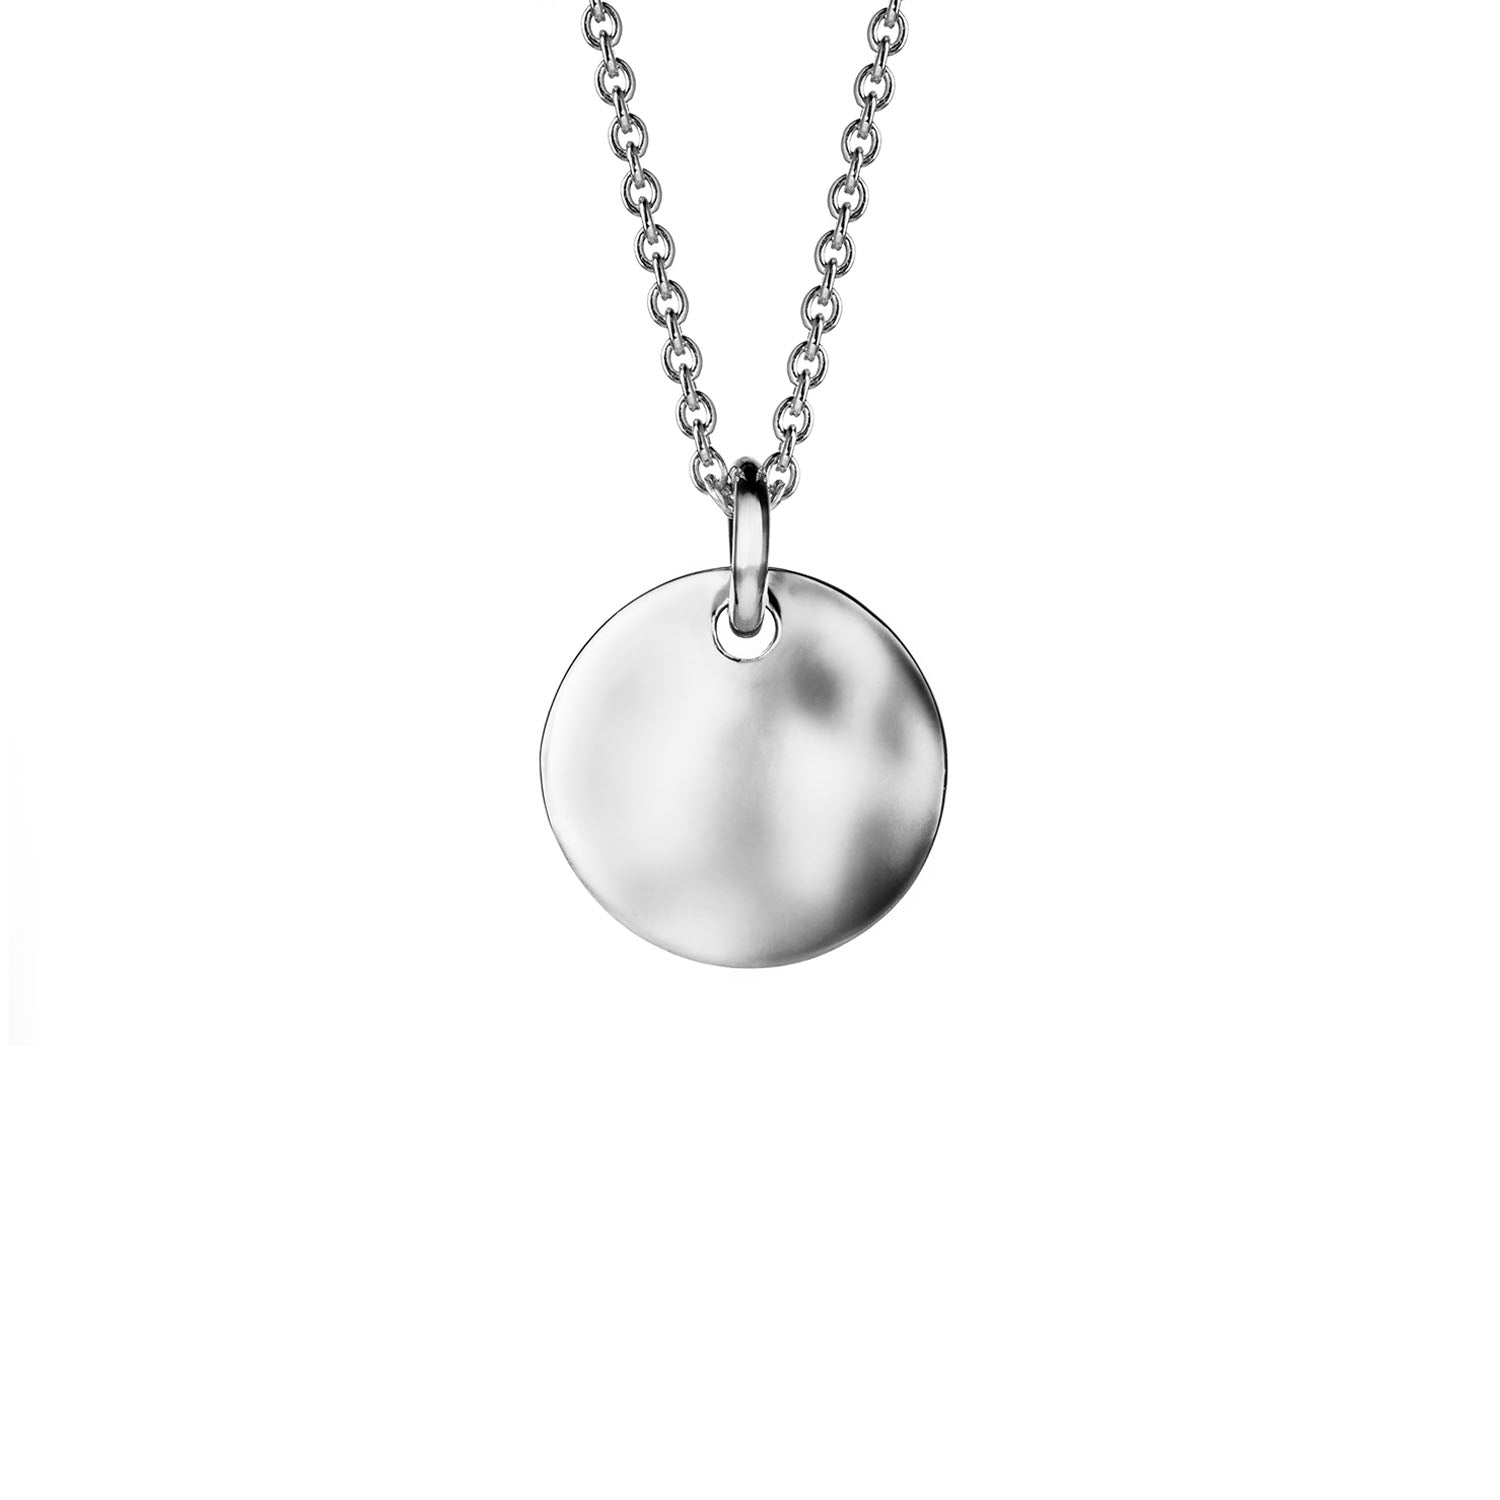 Hammered disk pendant necklace